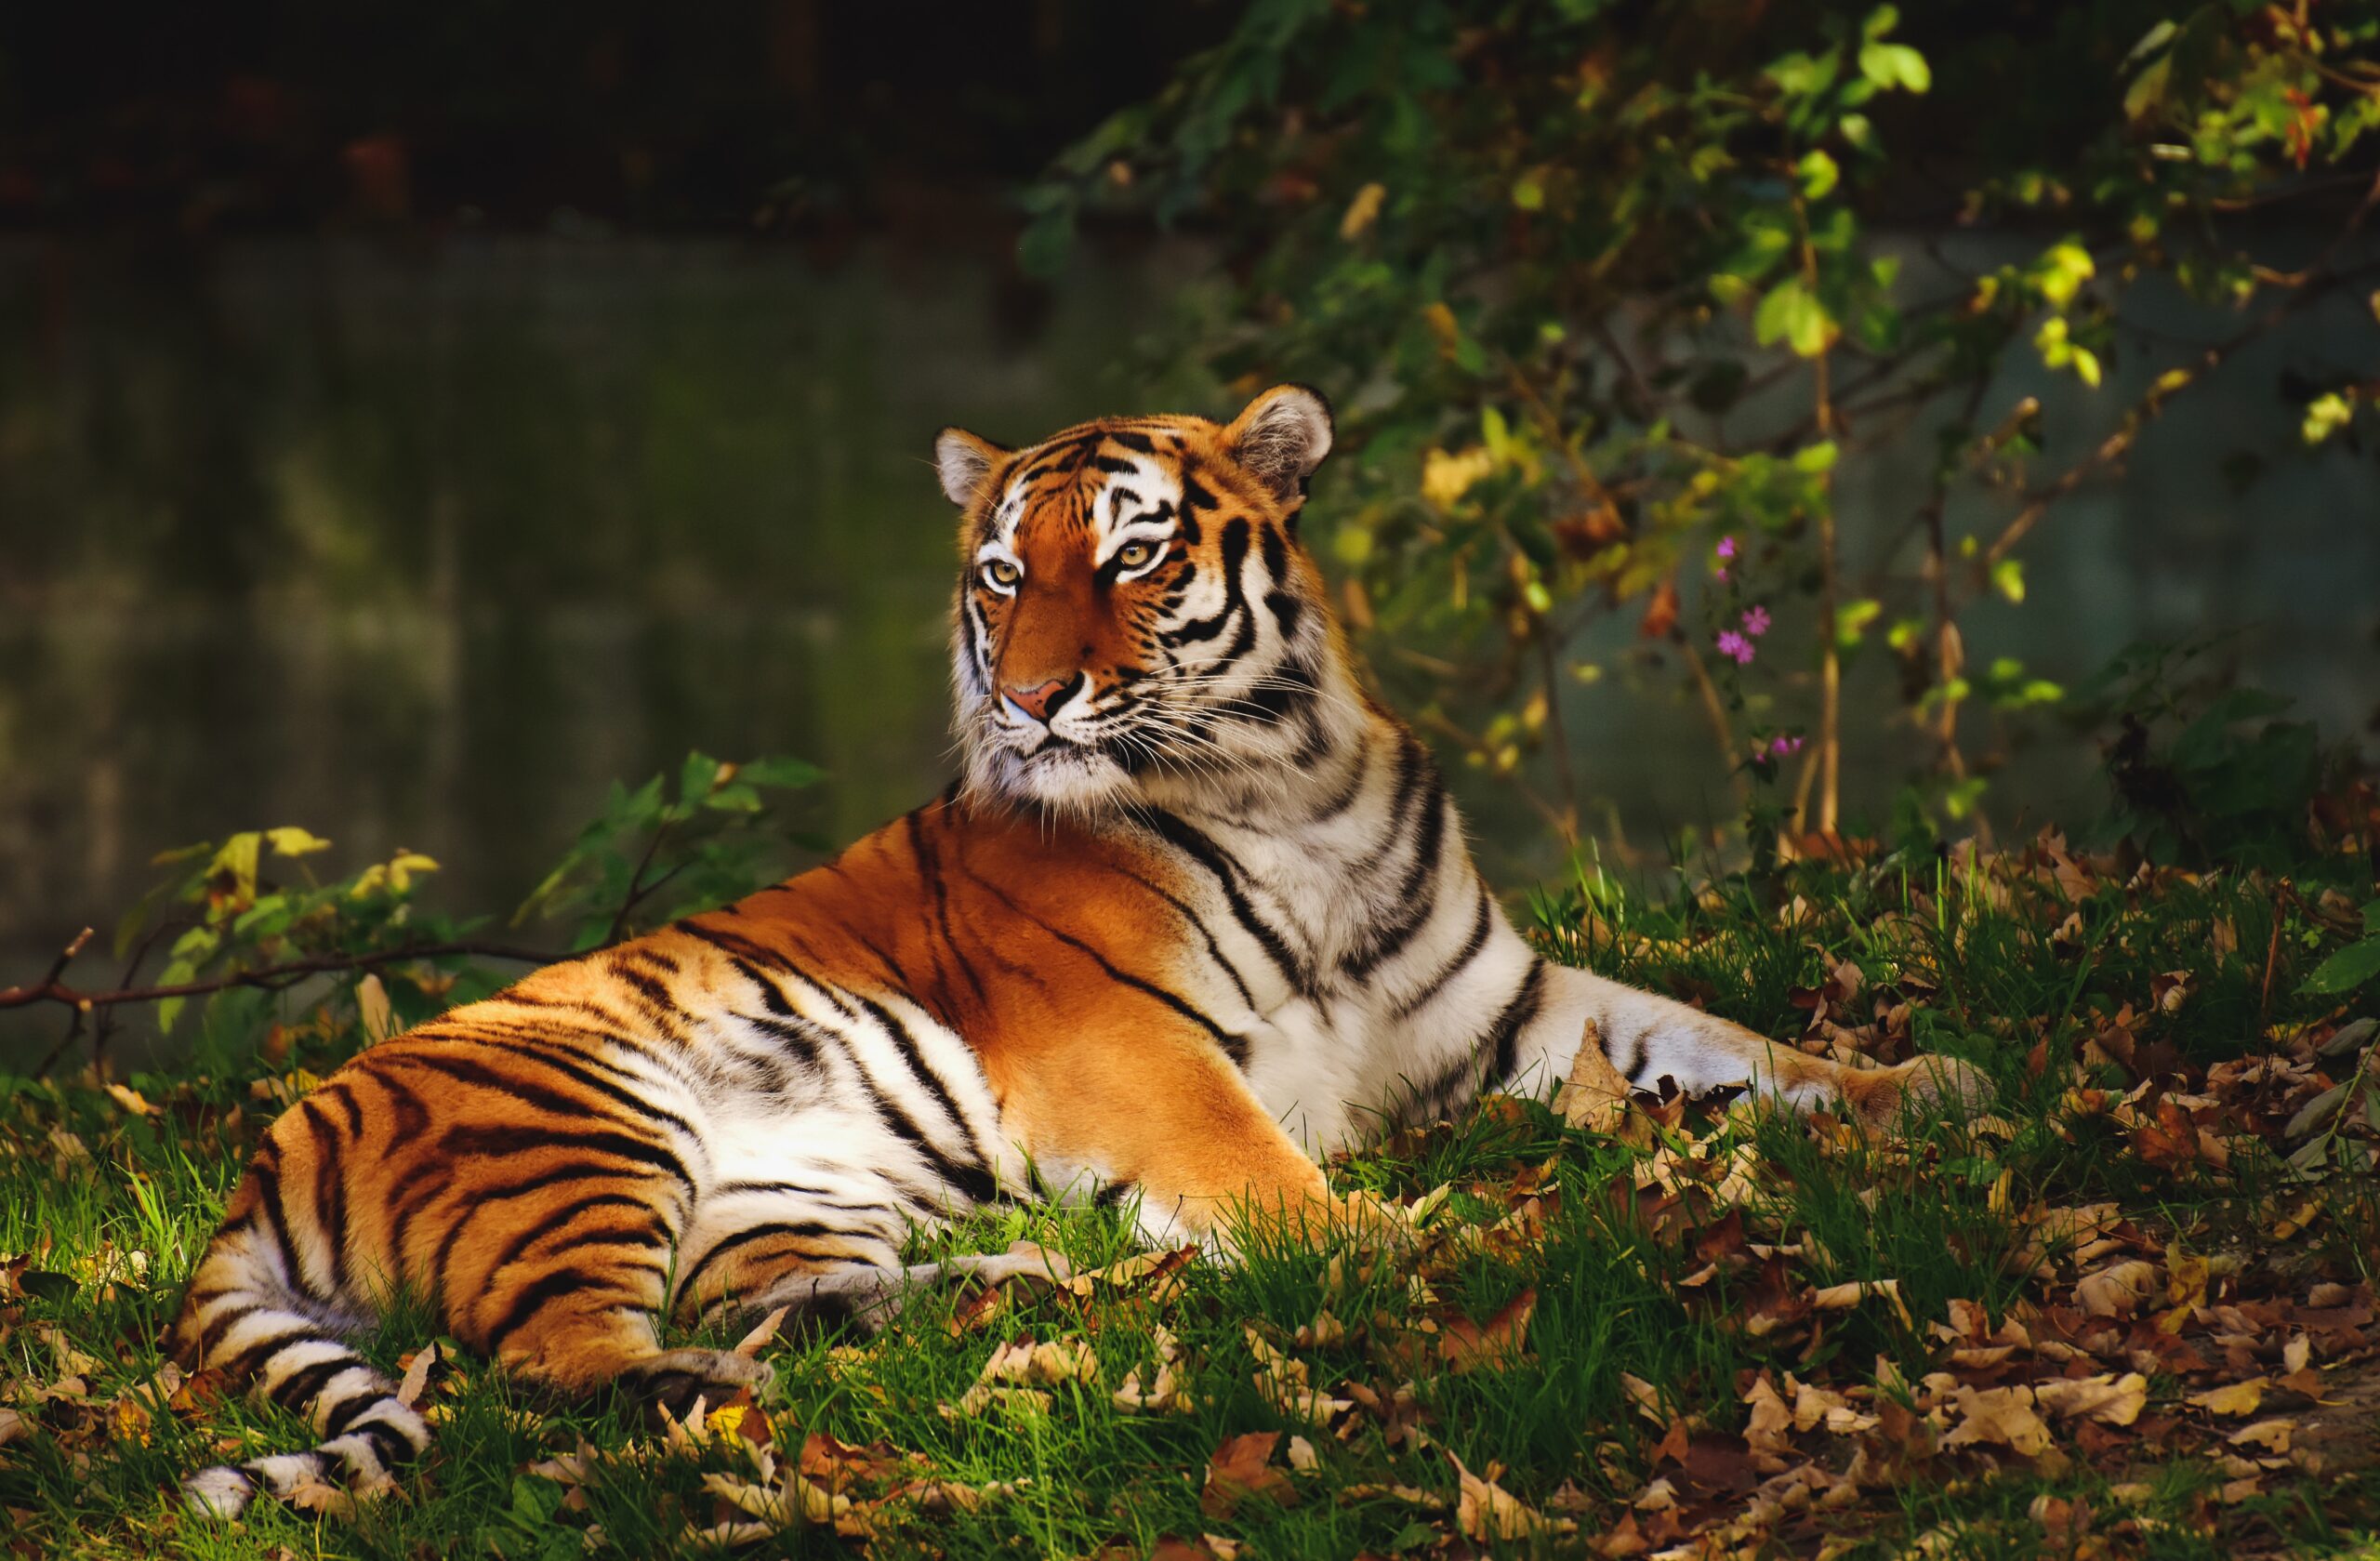 Tiger-Bangladesh